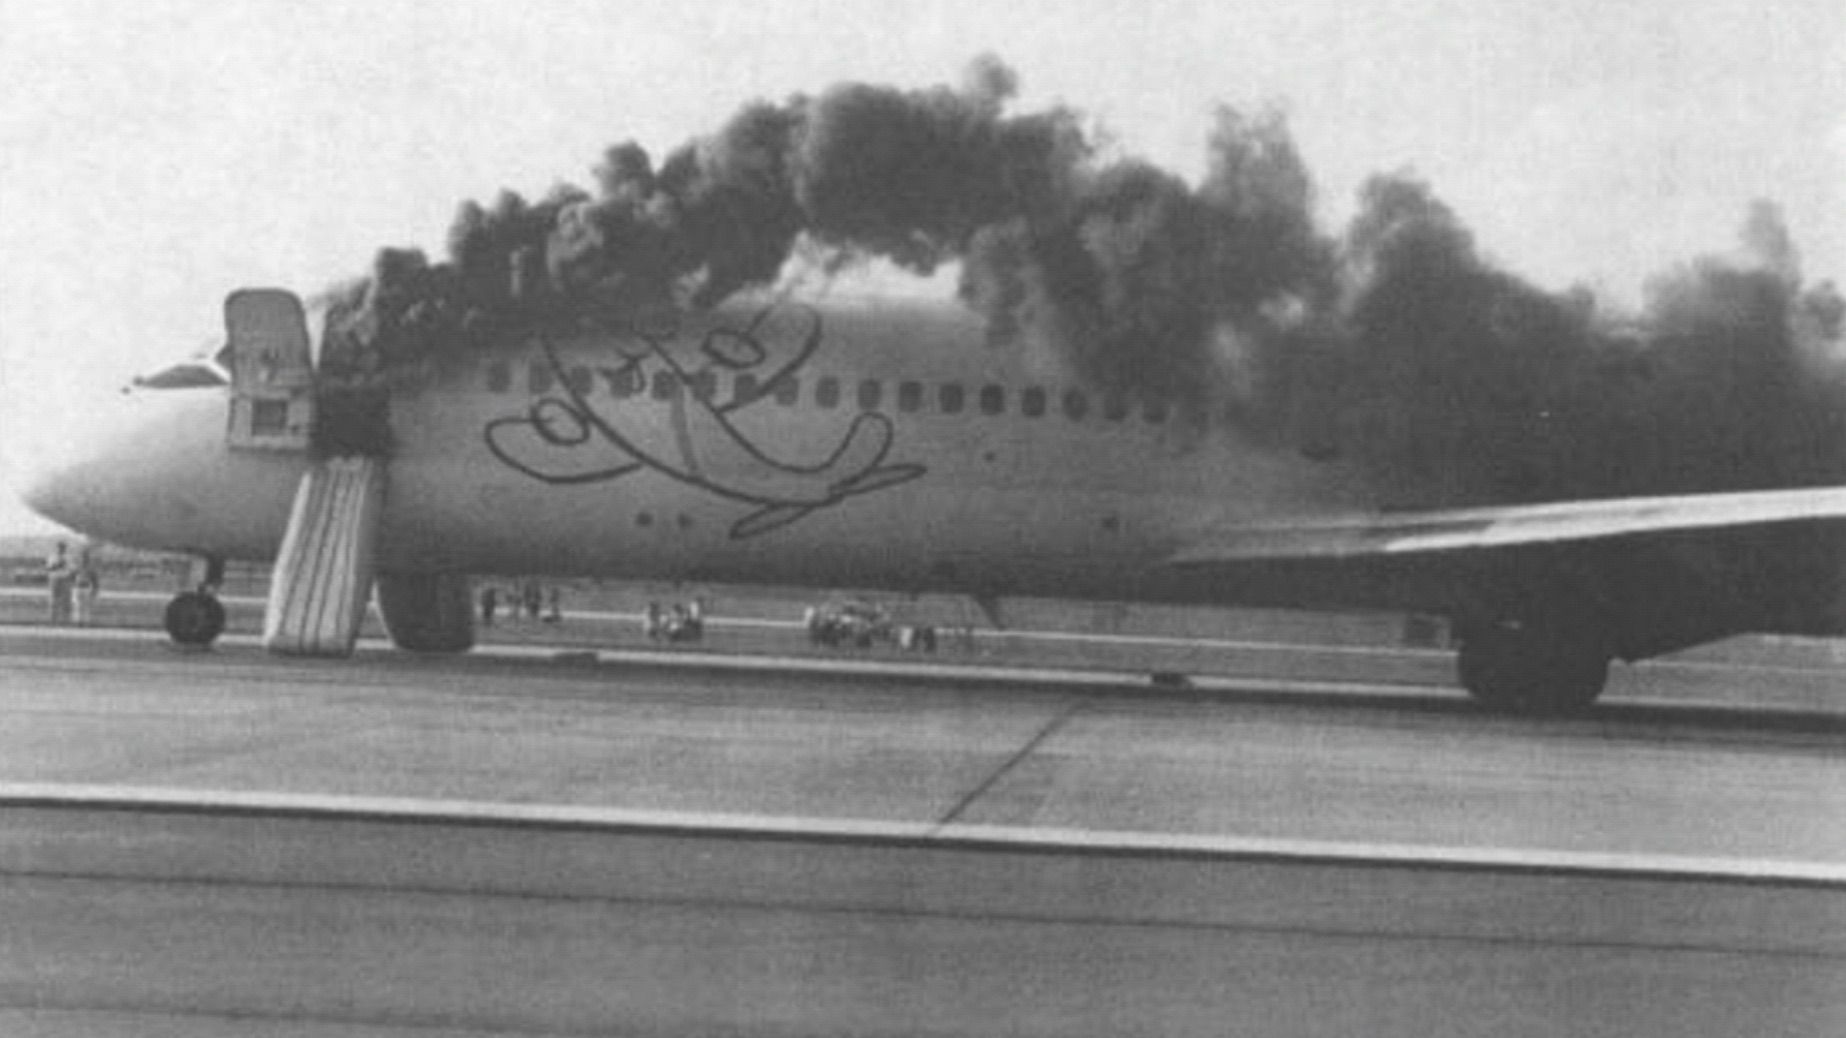 ValuJet Airlines flight 597 (N908VJ) in flames